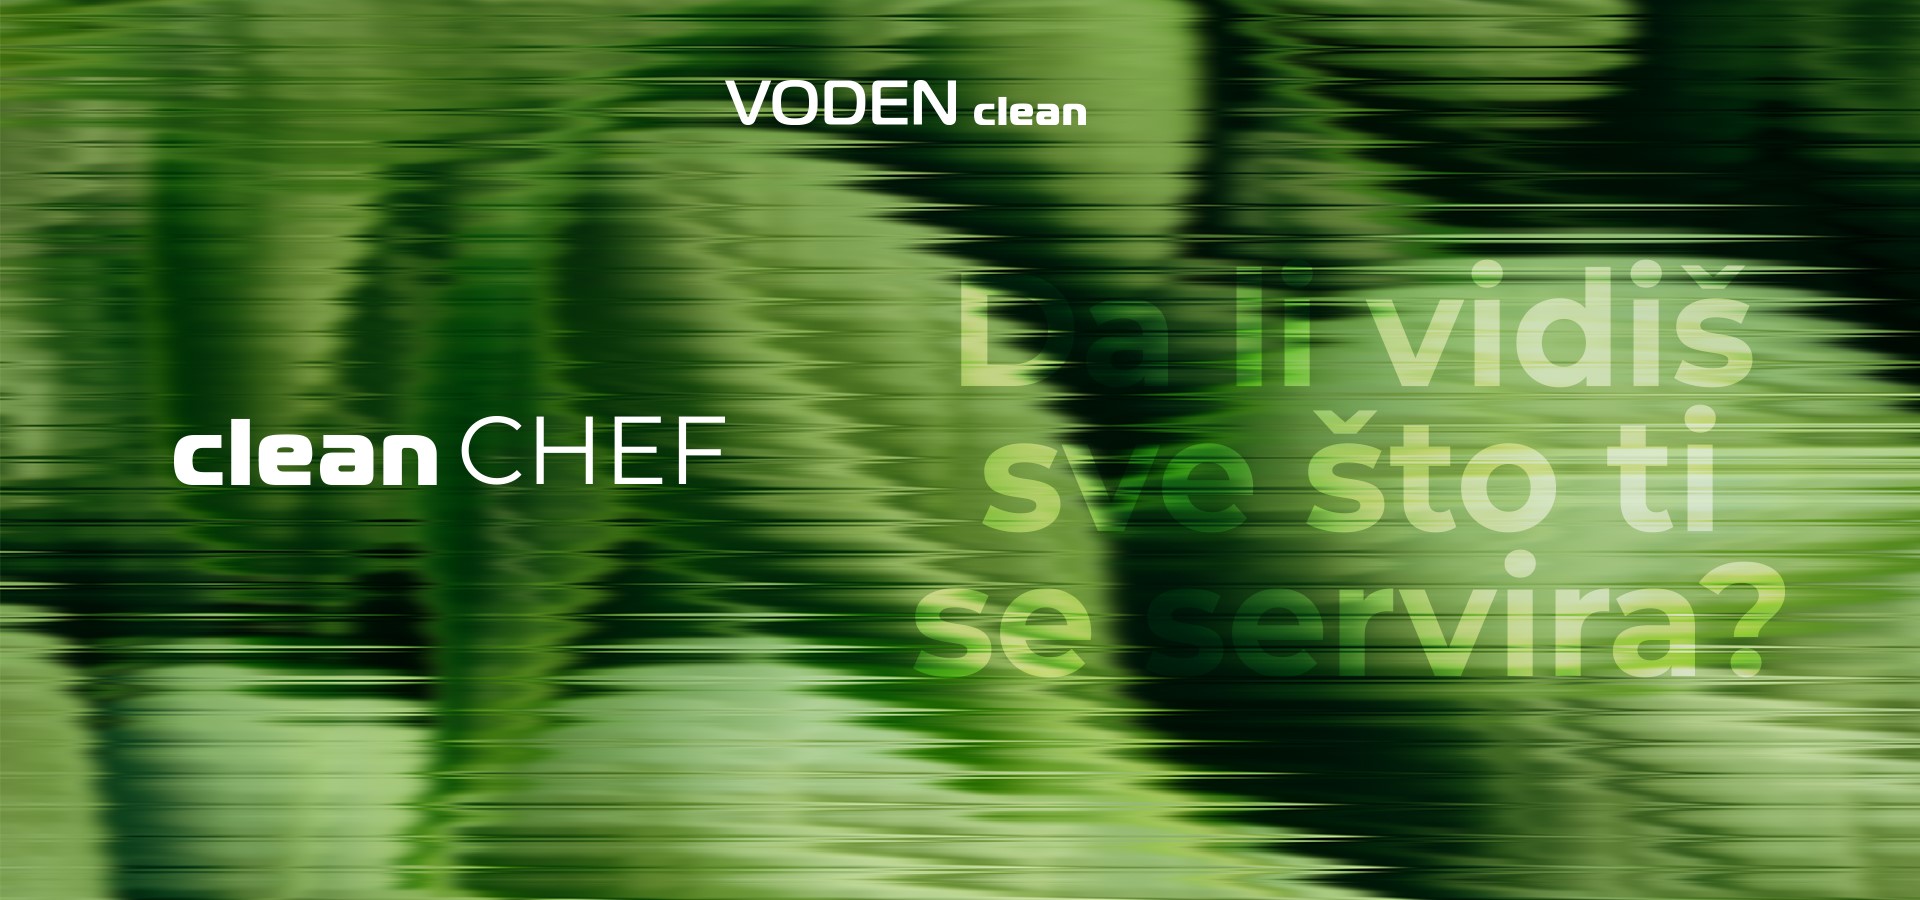 voden clean chef landscapeee